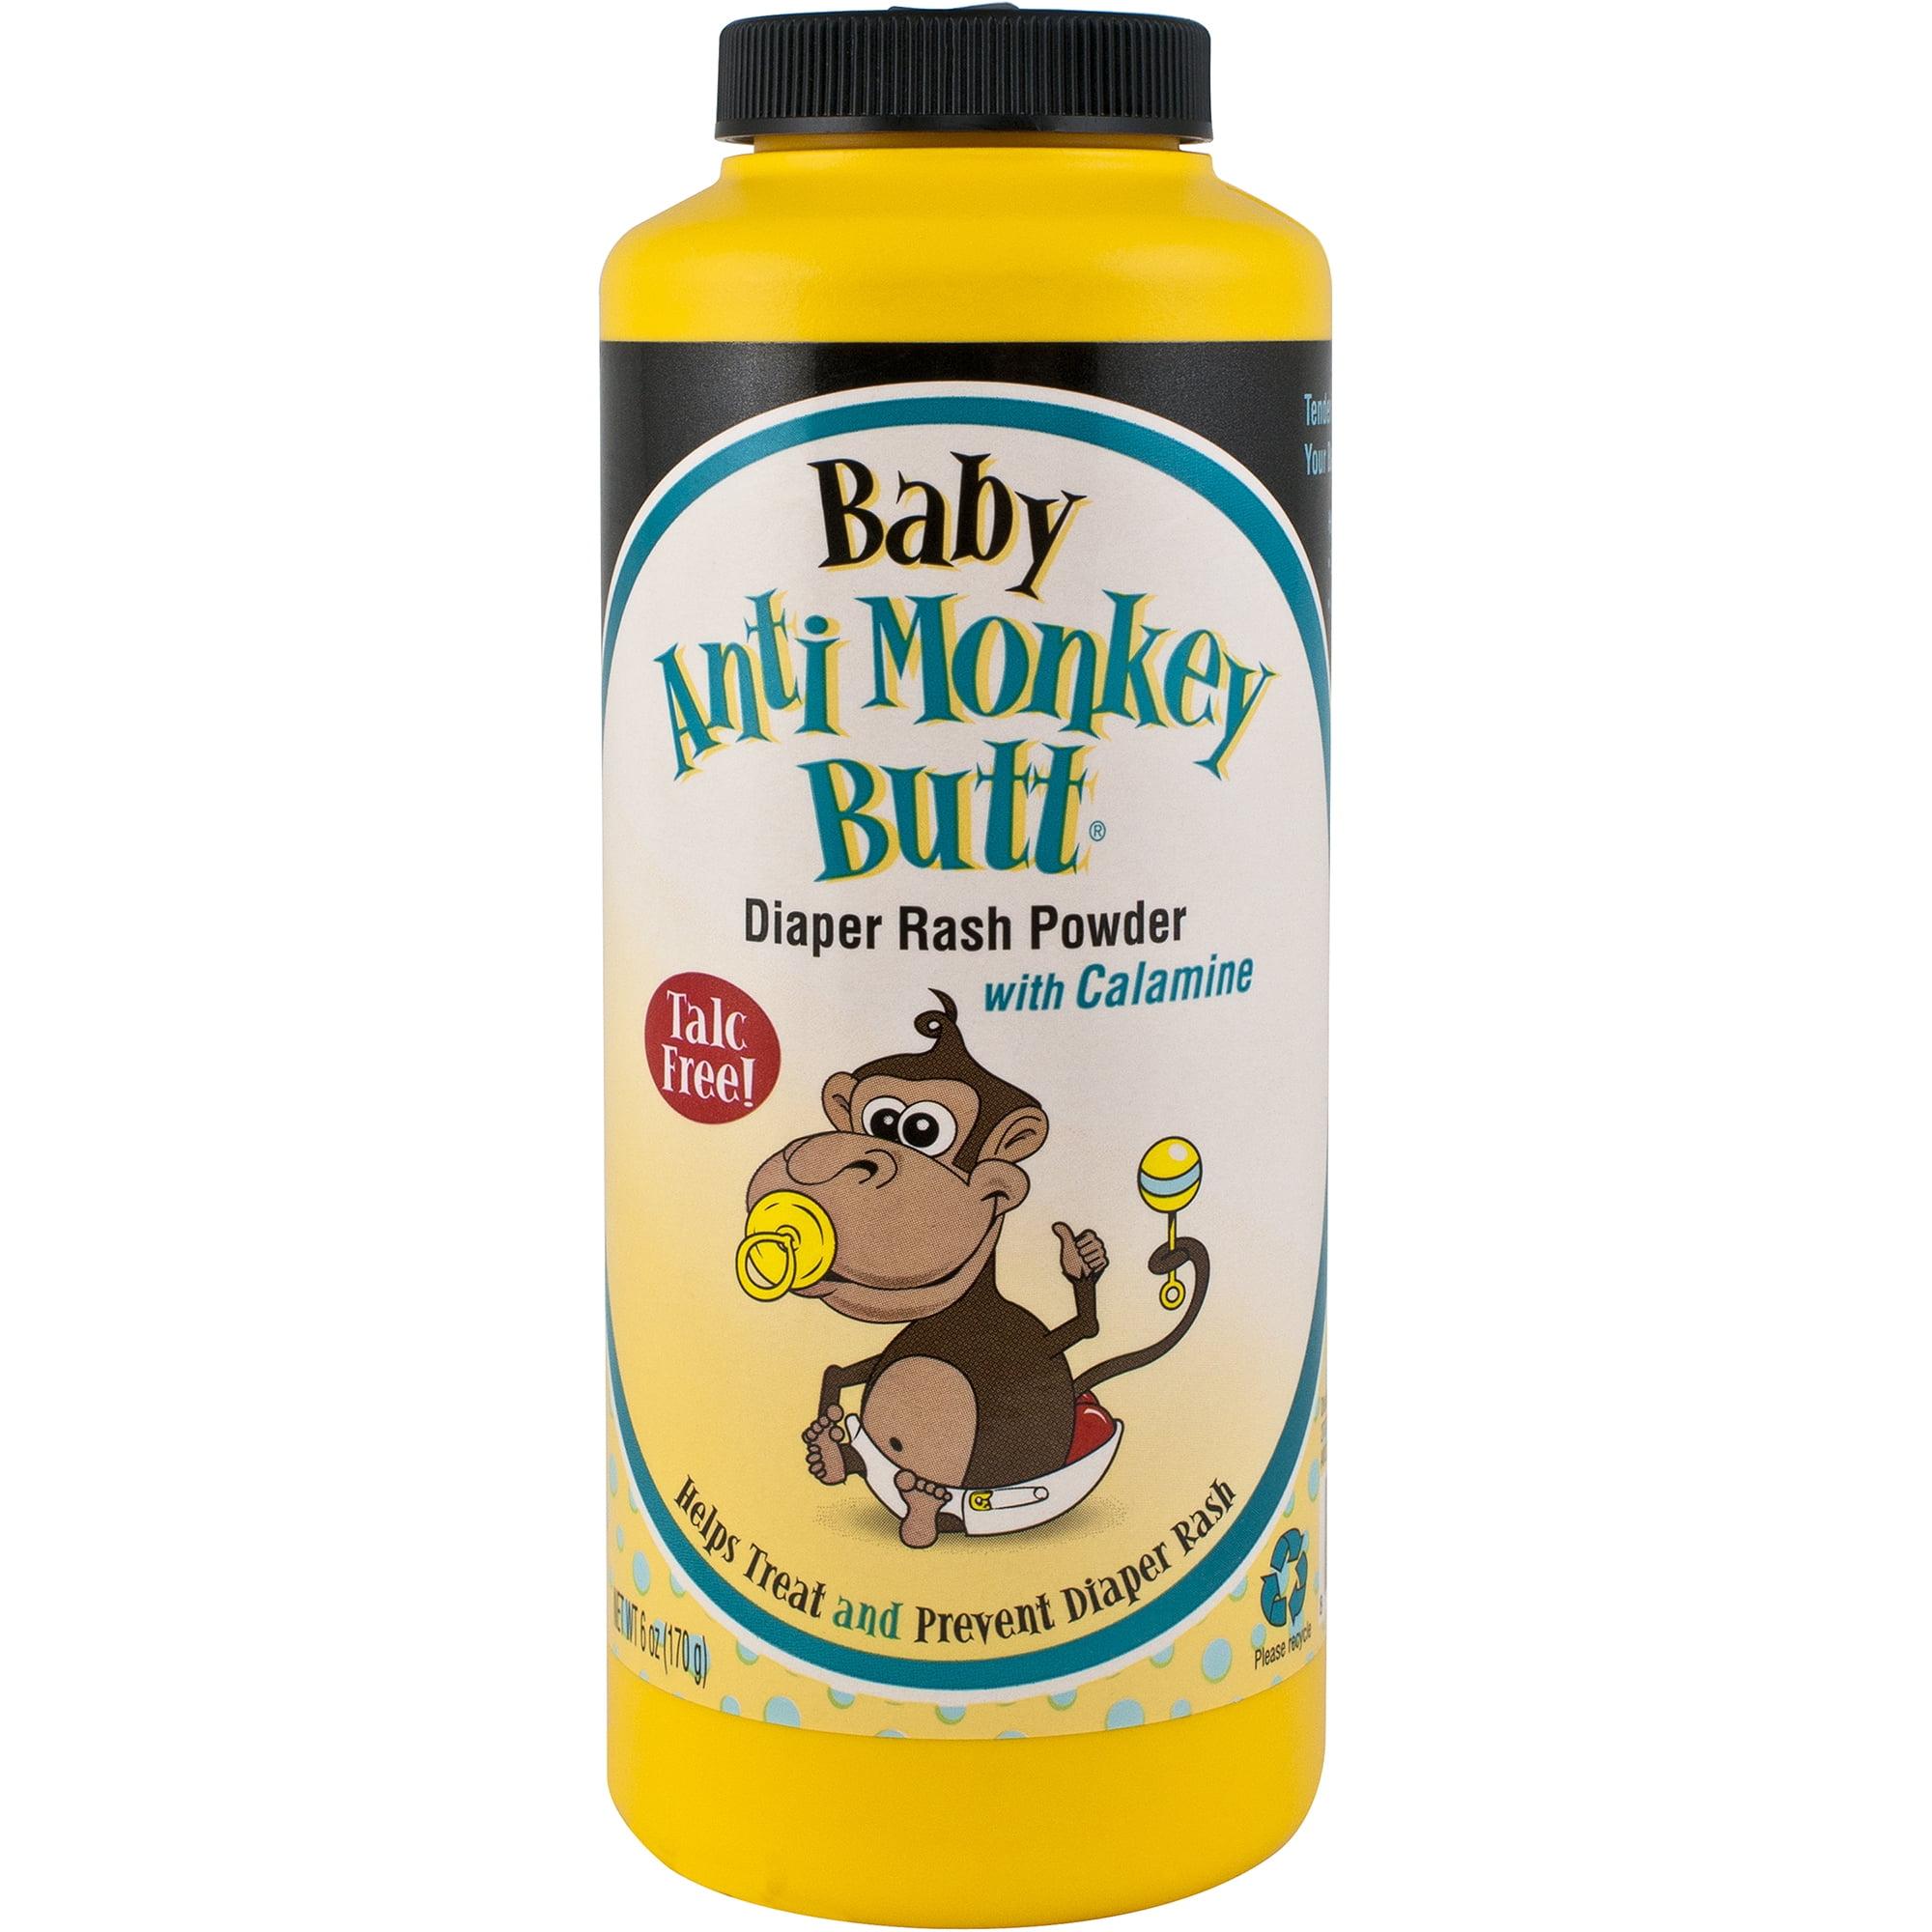 baby anti monkey butt